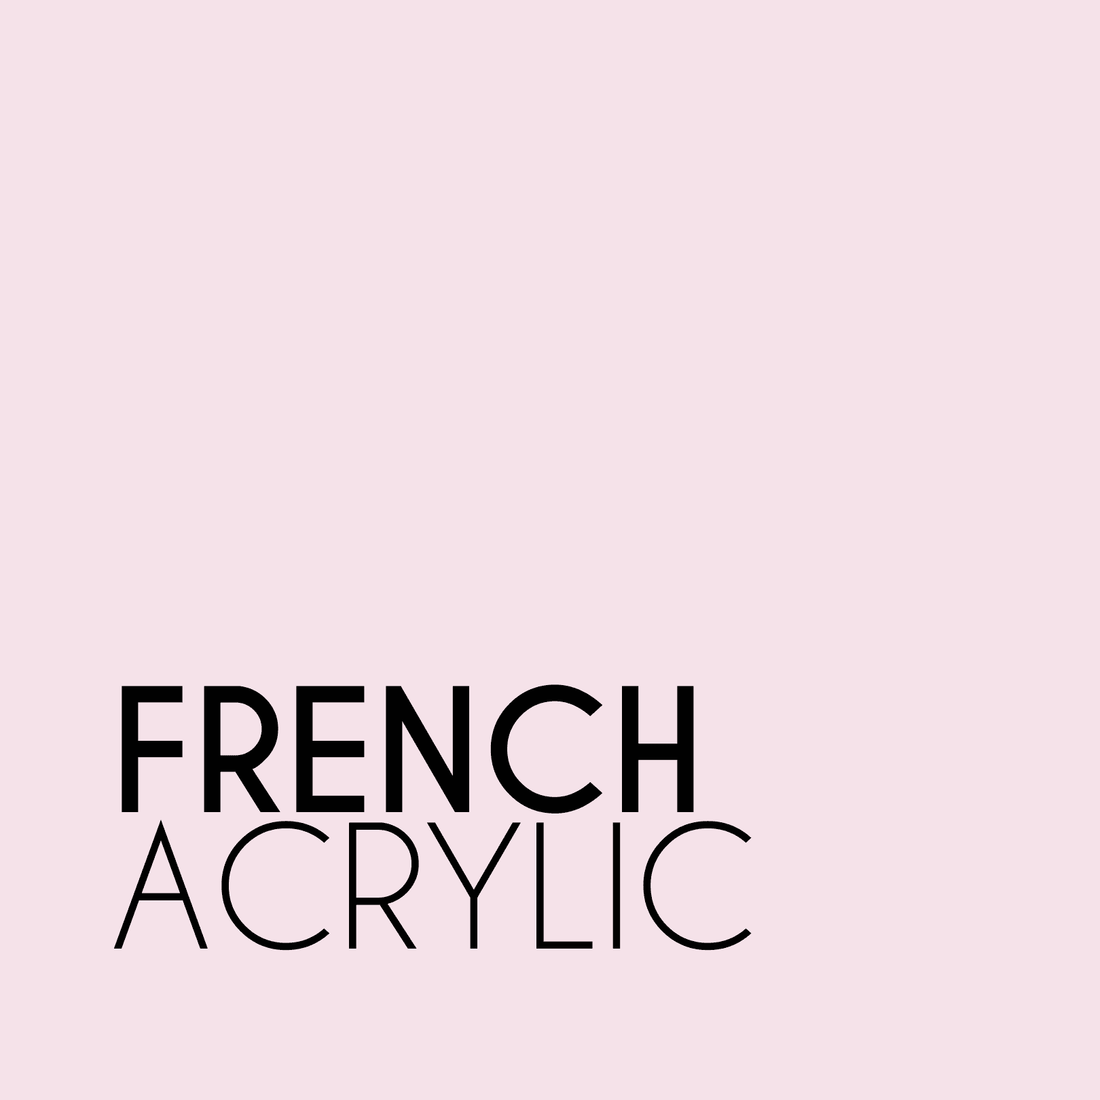 French Acrylic